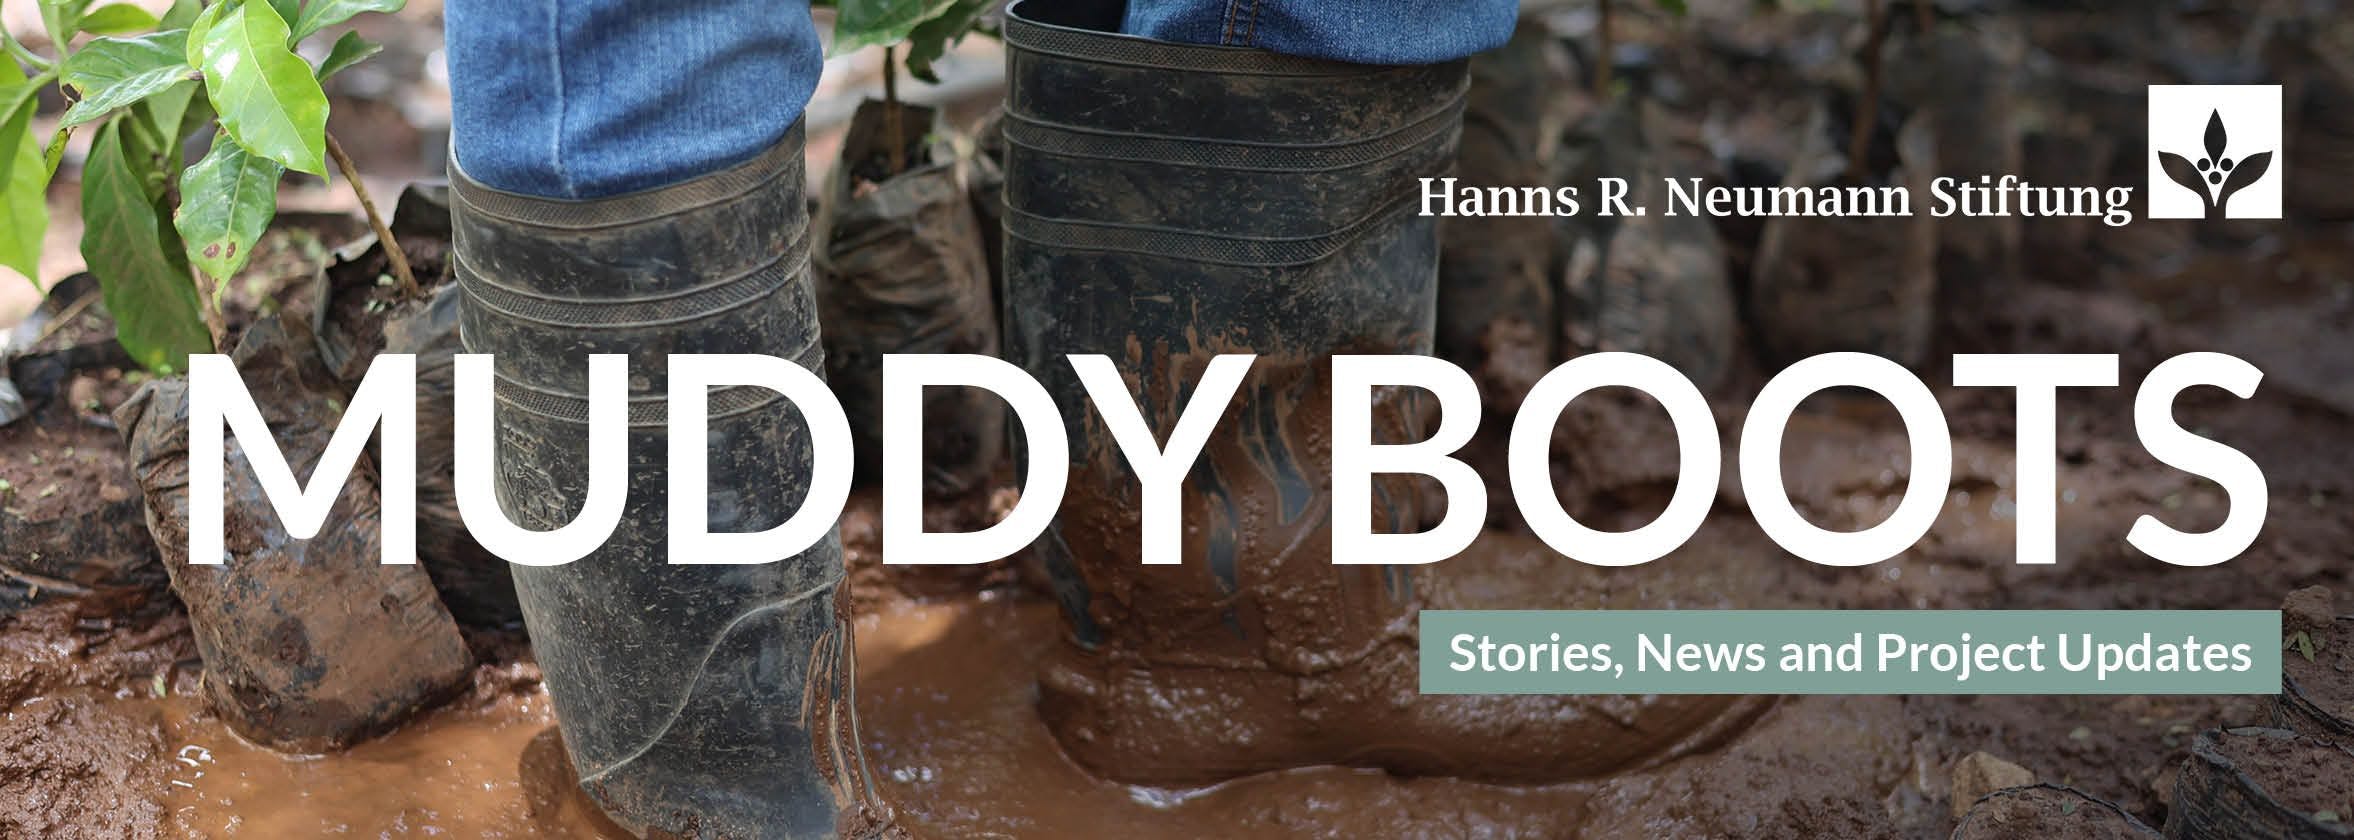 Muddy Boots Newsletter